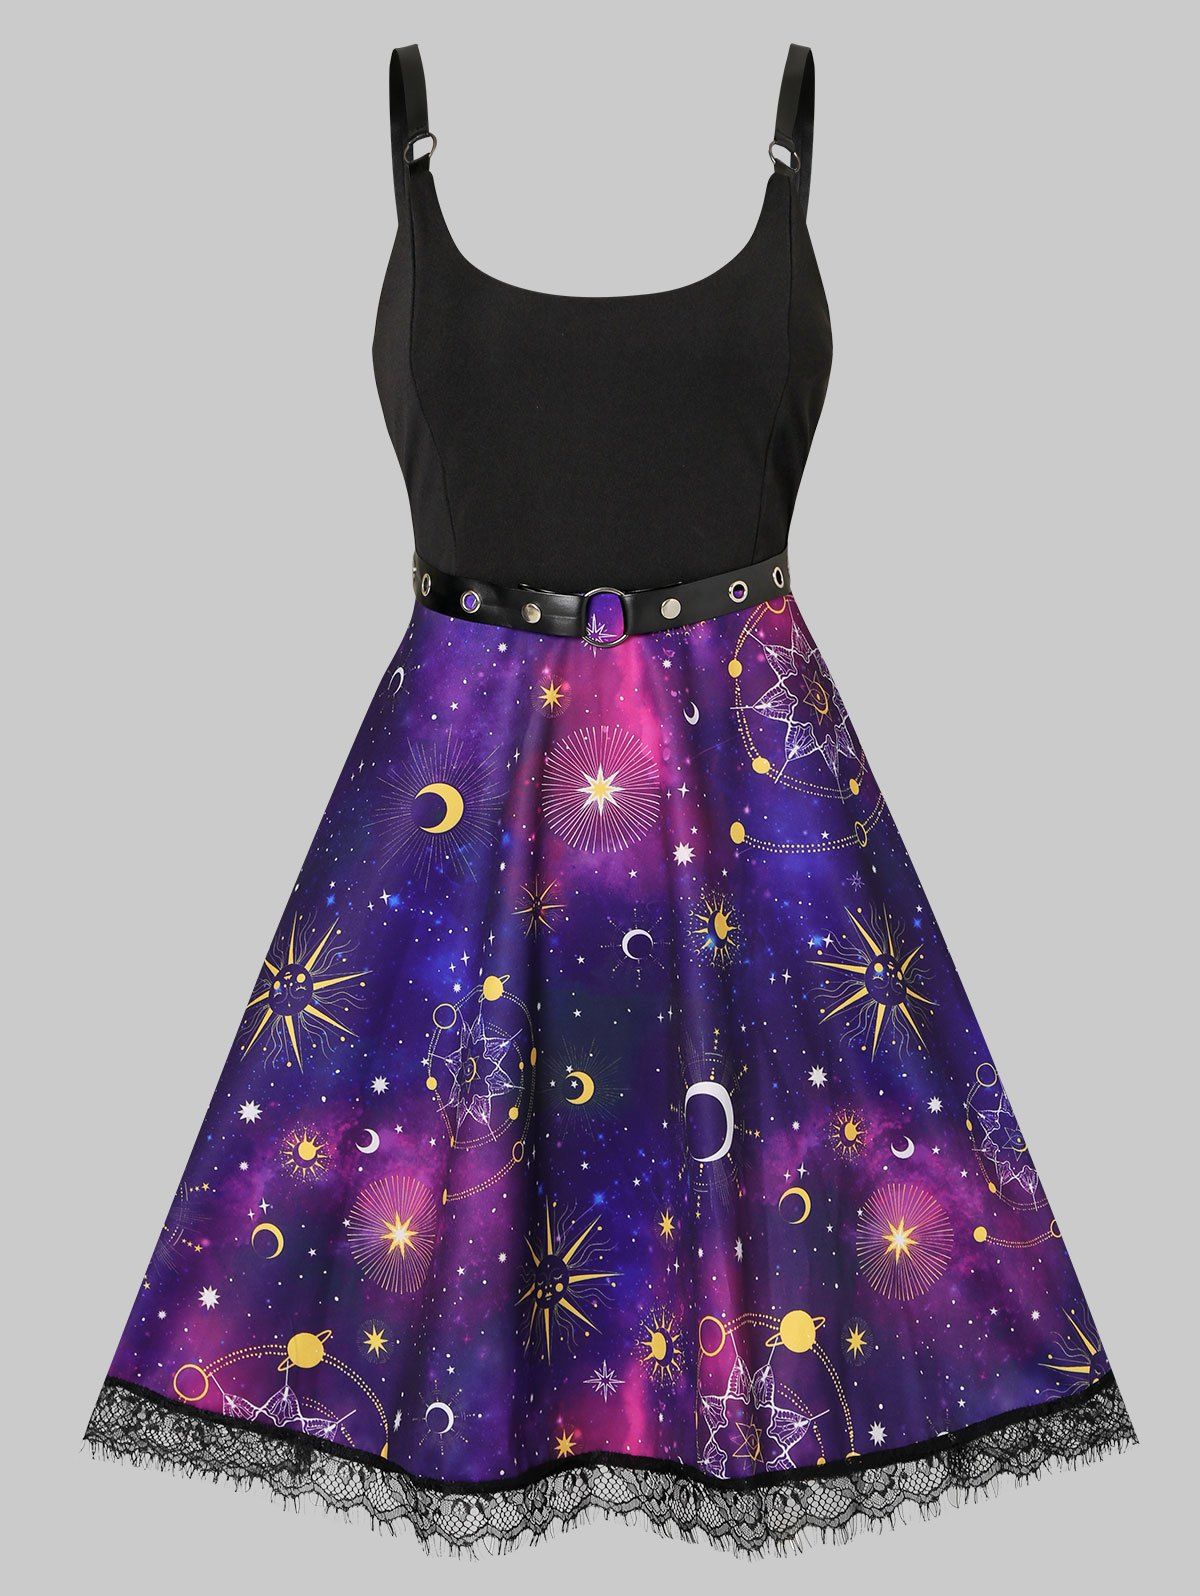 Sun Moon Star Print Lace Insert Grommet Belt Dress - PURPLE L